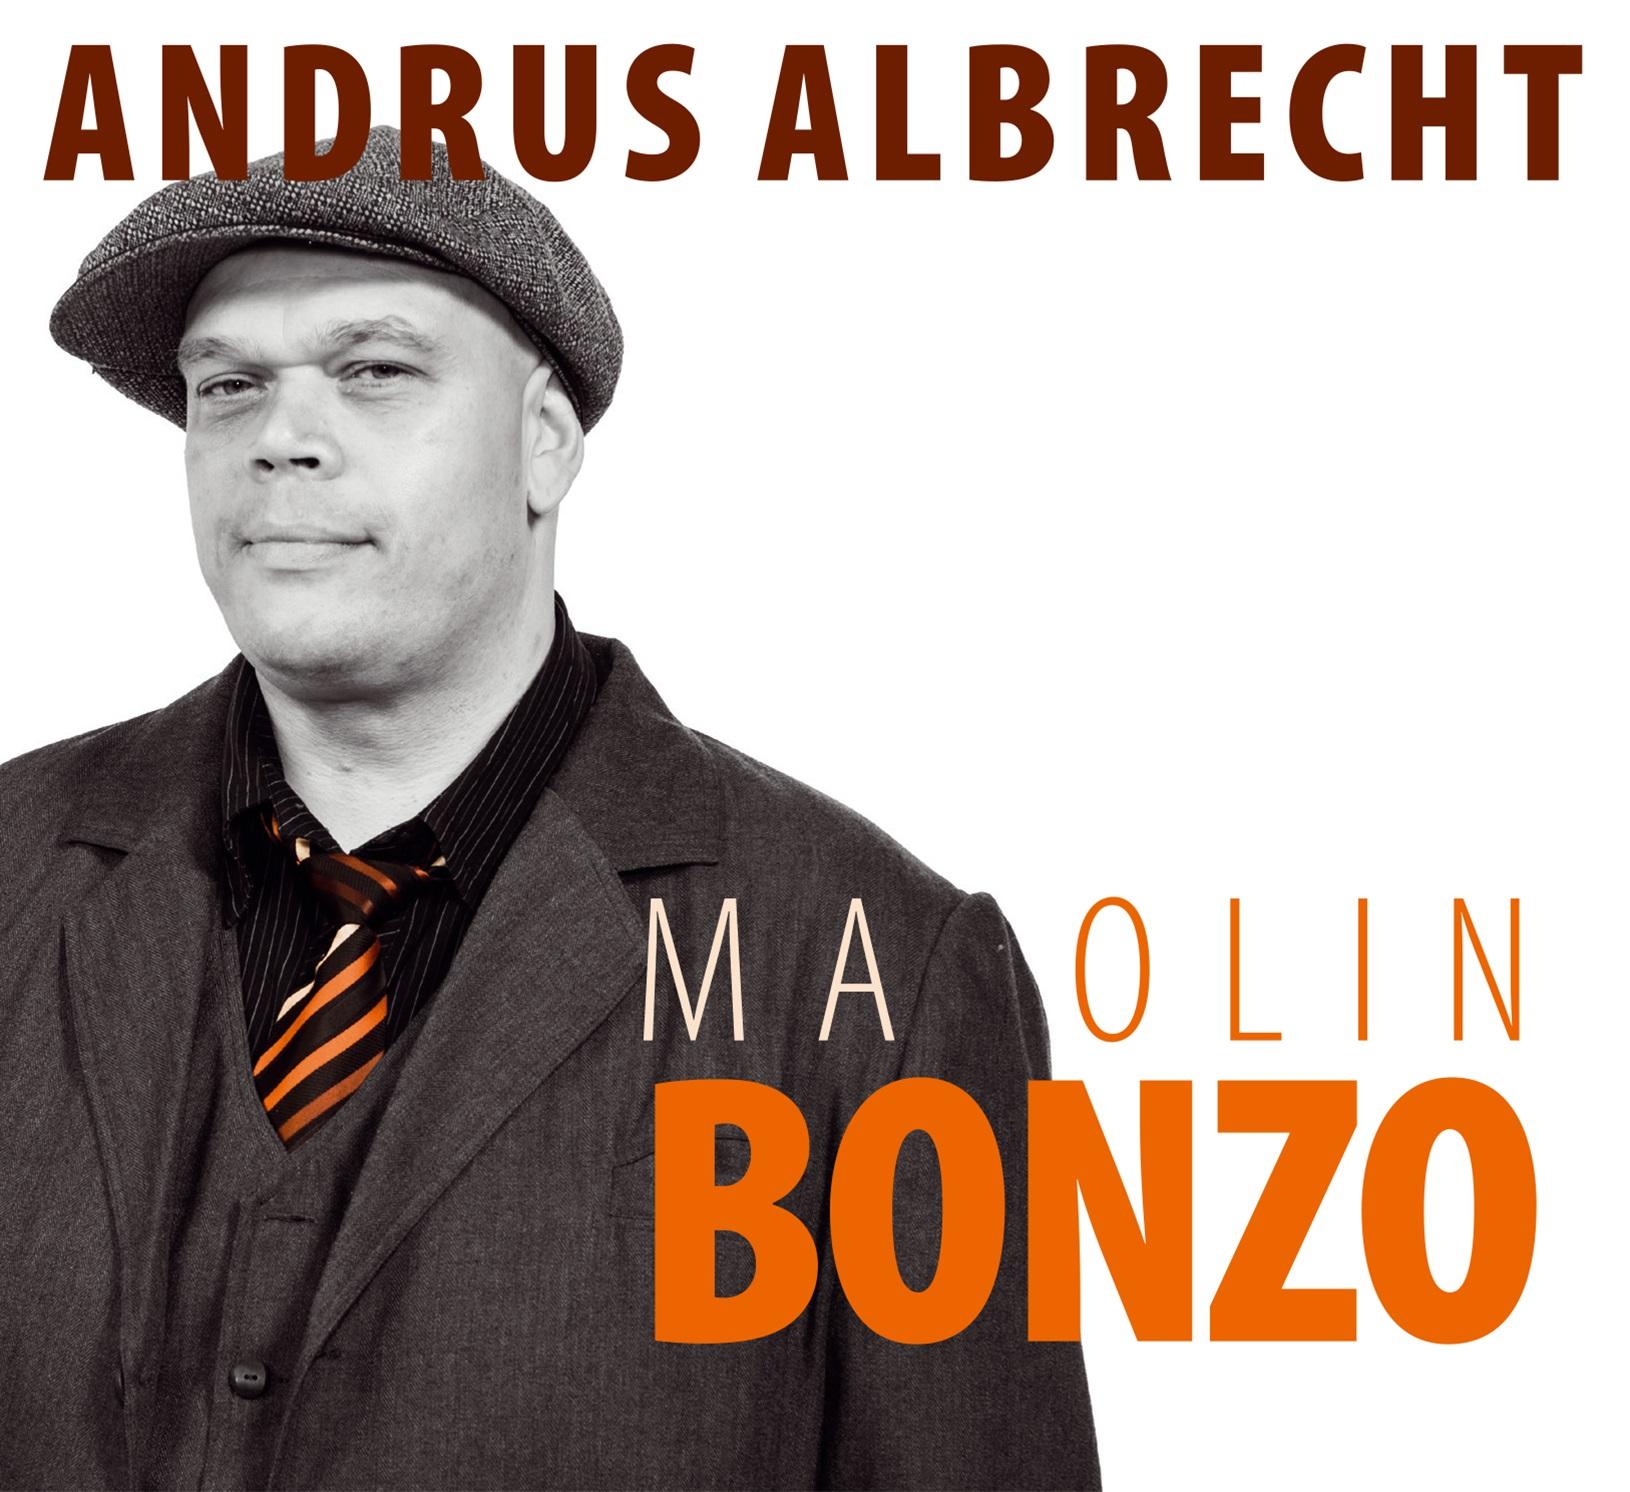 ANDRUS ALBRECHT - MA OLIN BONZO (2017) CD